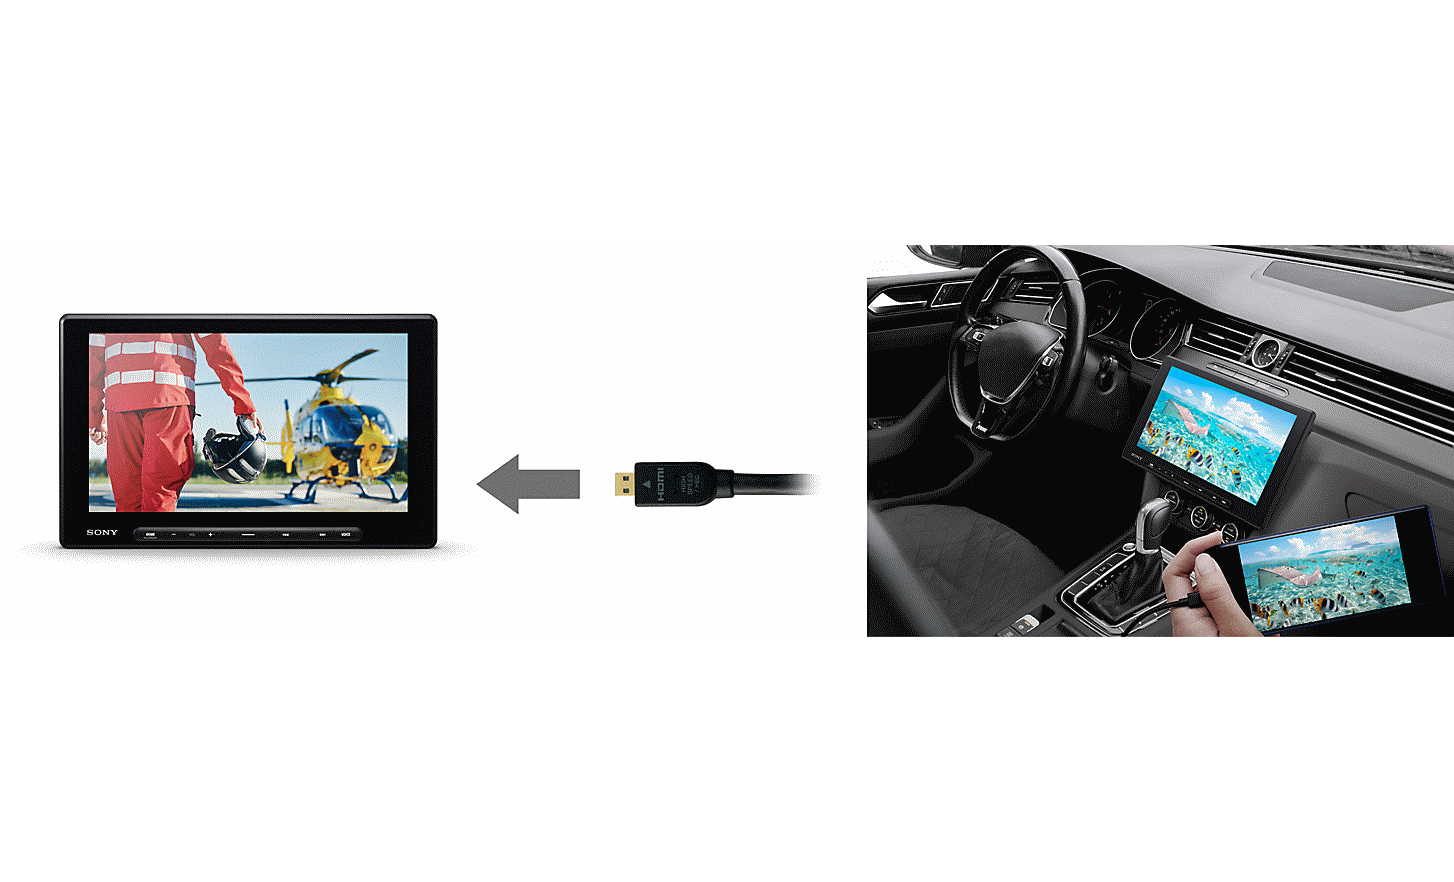 XAV-AX8500 في لوحة قيادة مع هاتف متصل وصورة لكبل HDMI مع سهم يشير إلى جهاز XAV-AX8500 آخر